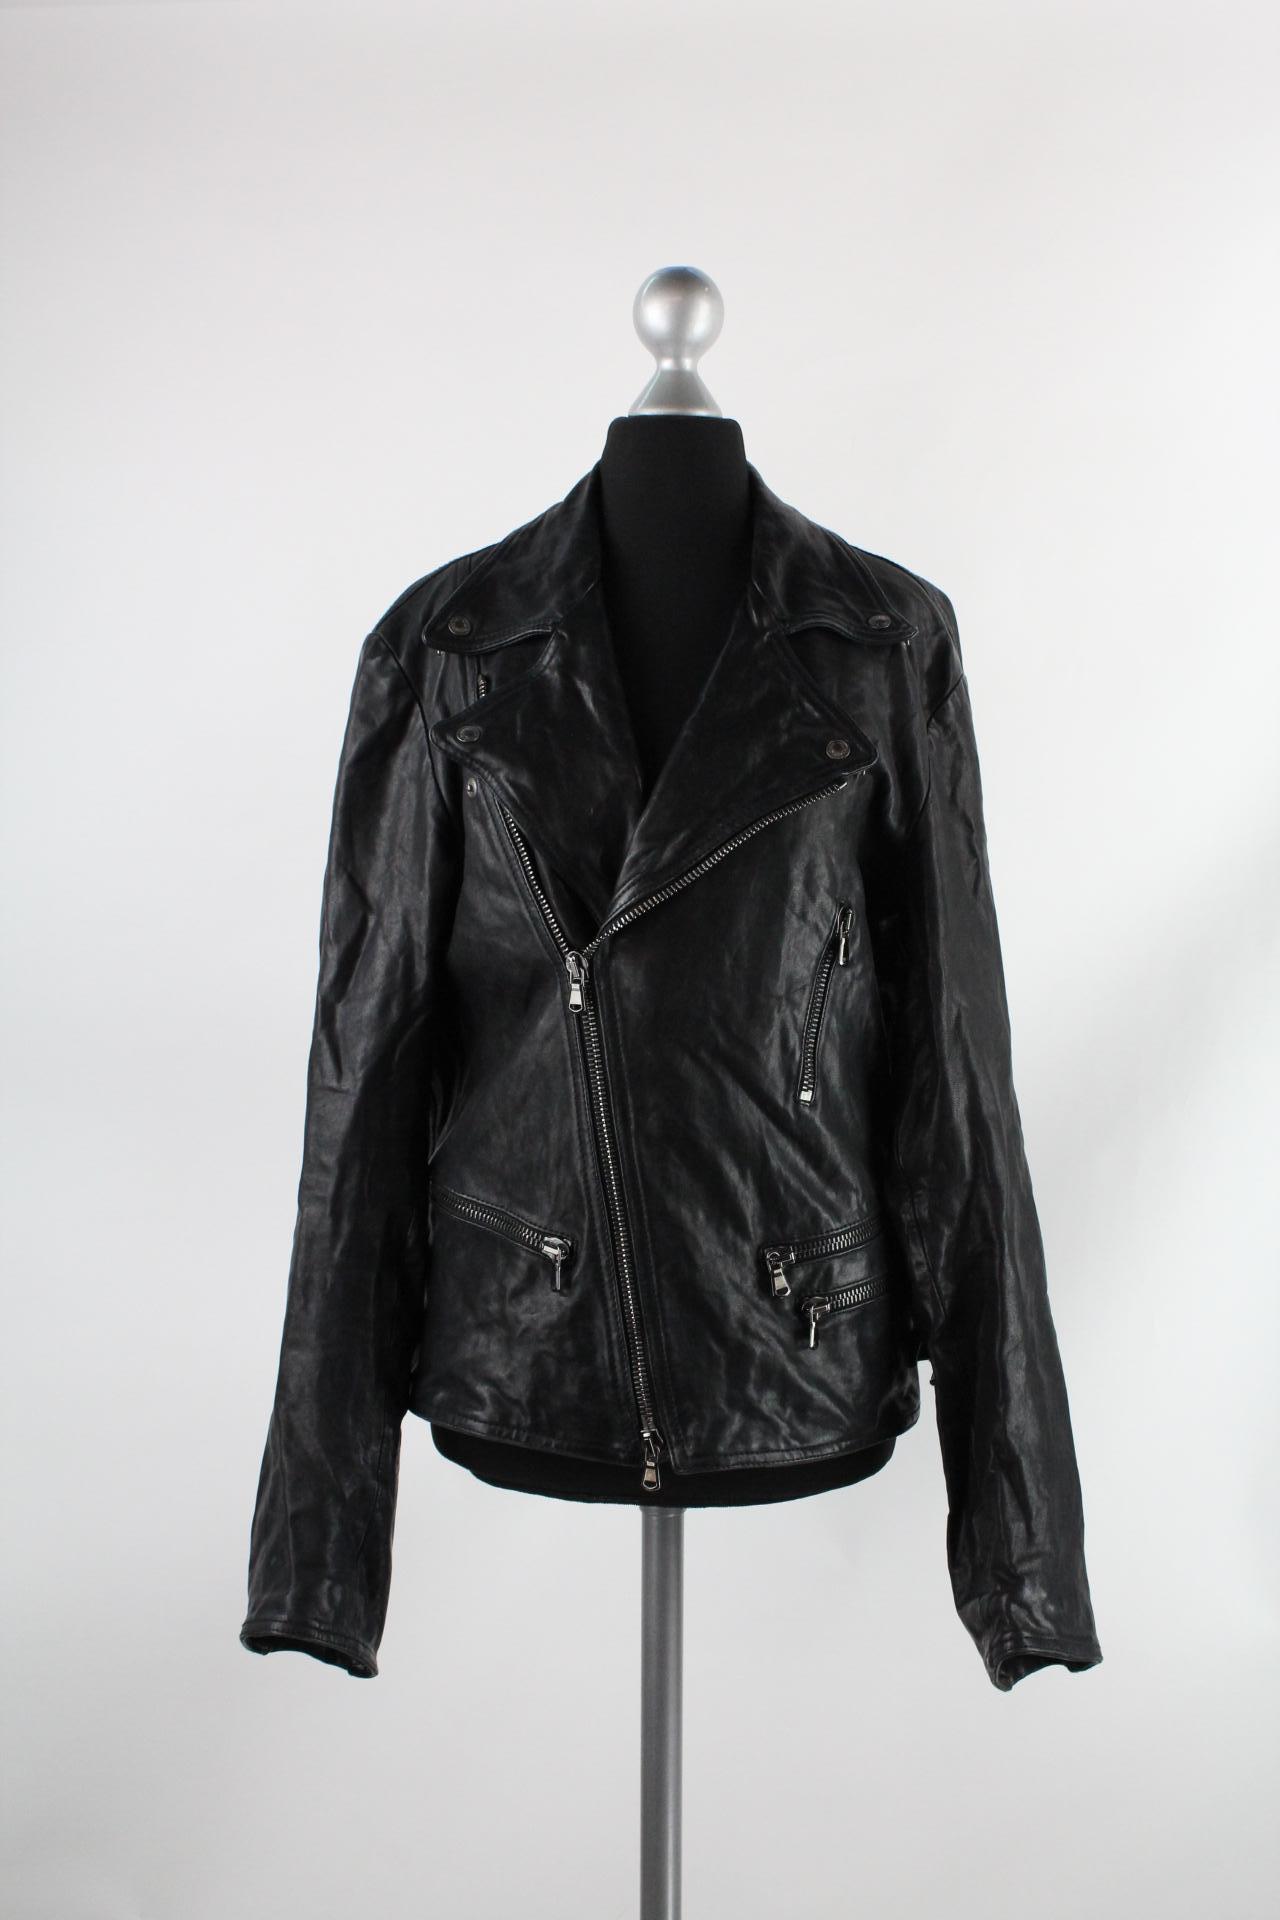 Mangano Damen-Lederjacke schwarz Größe 48